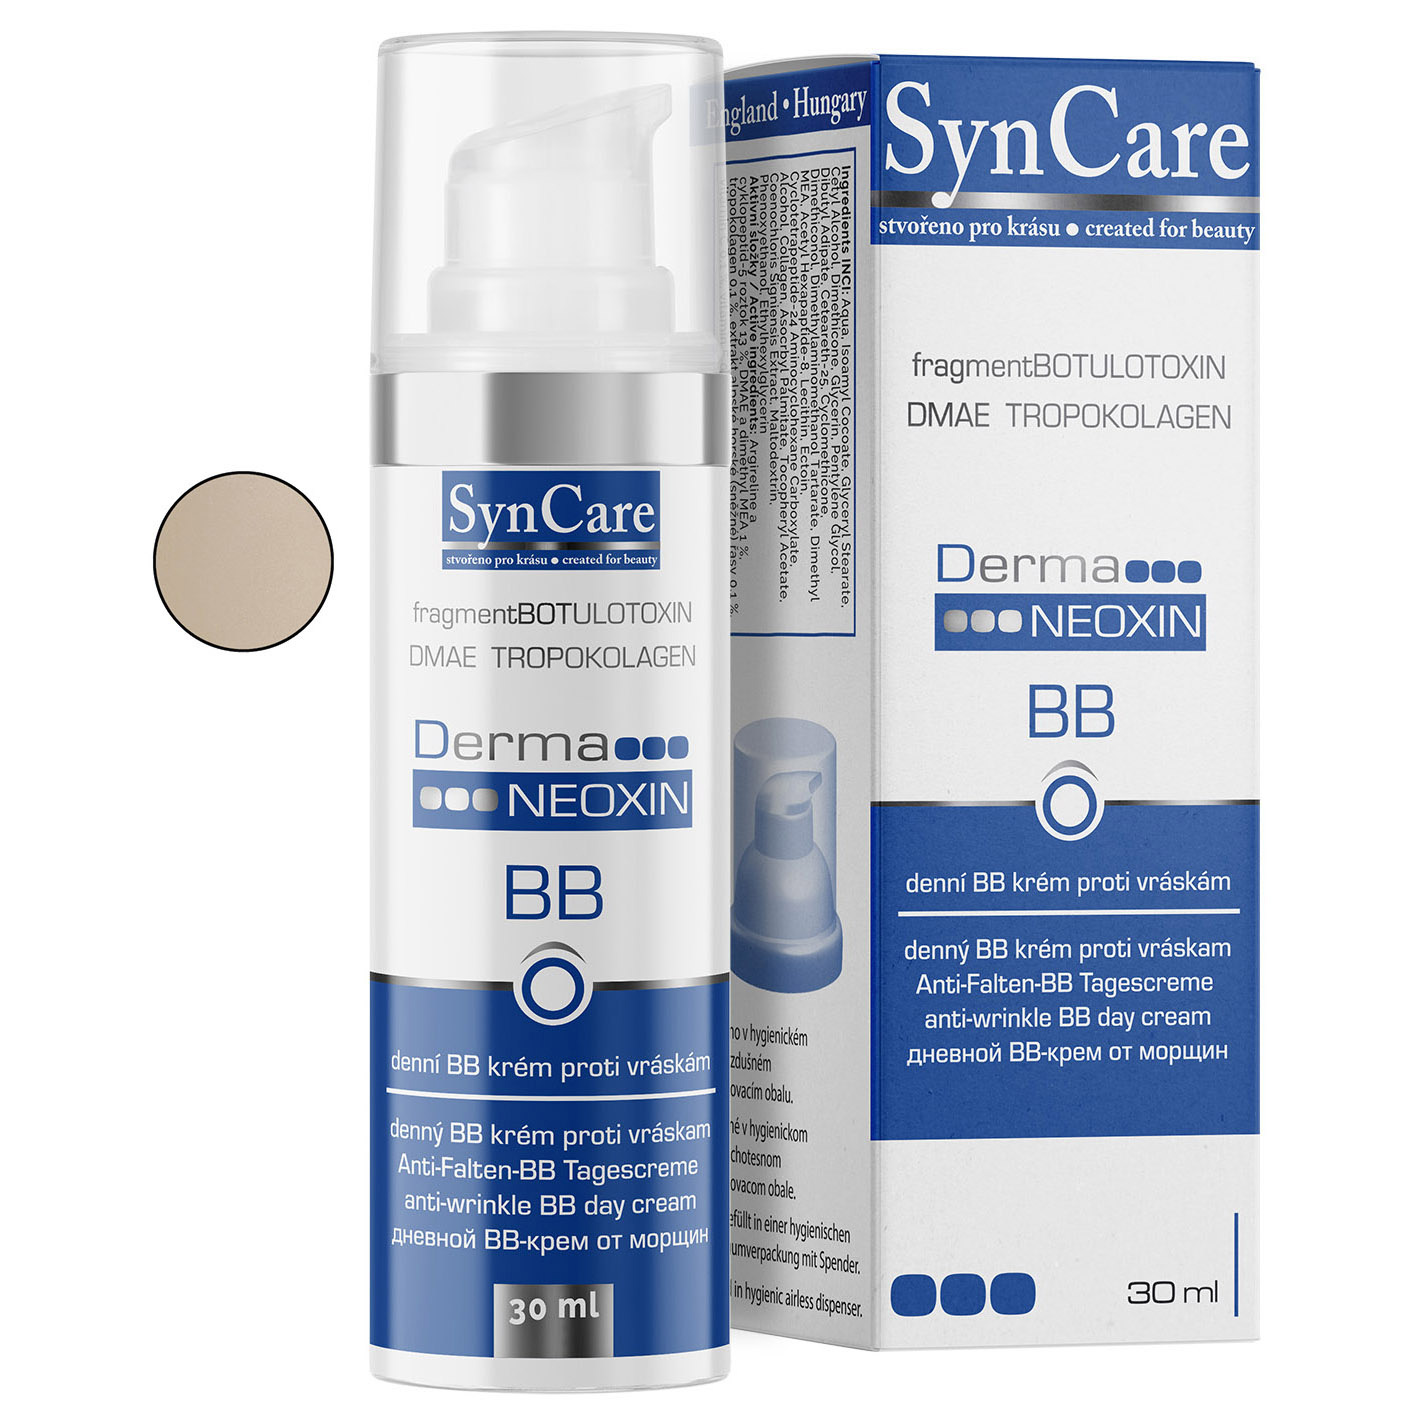 SynCare - DermaNEOXIN BB denní krém